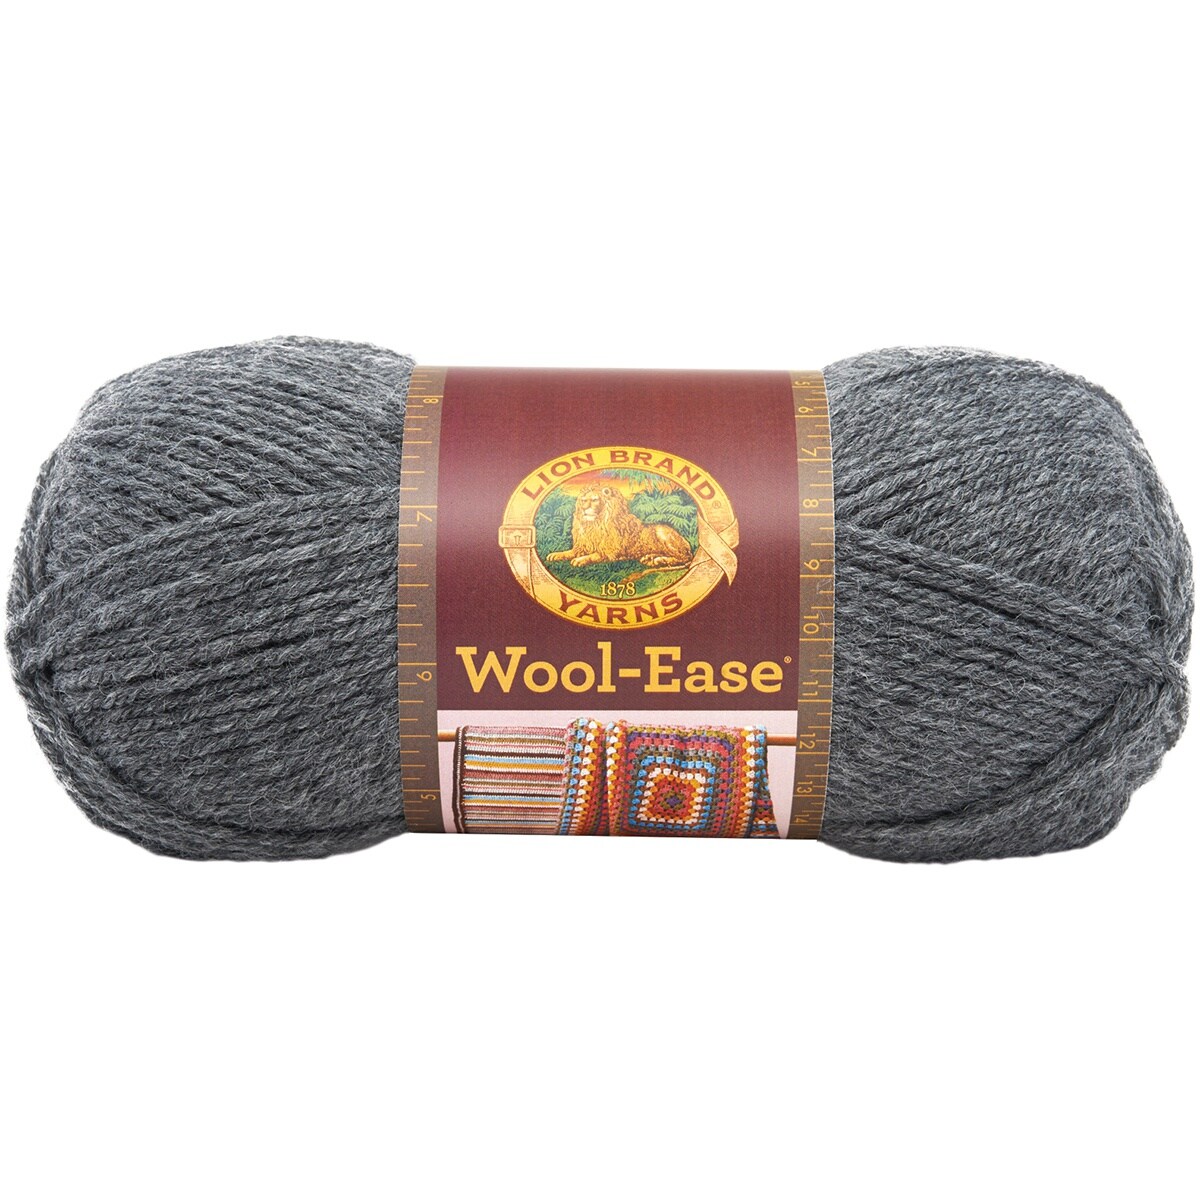 Multipack of 10 - Lion Brand Wool-Ease Yarn -Oxford Grey